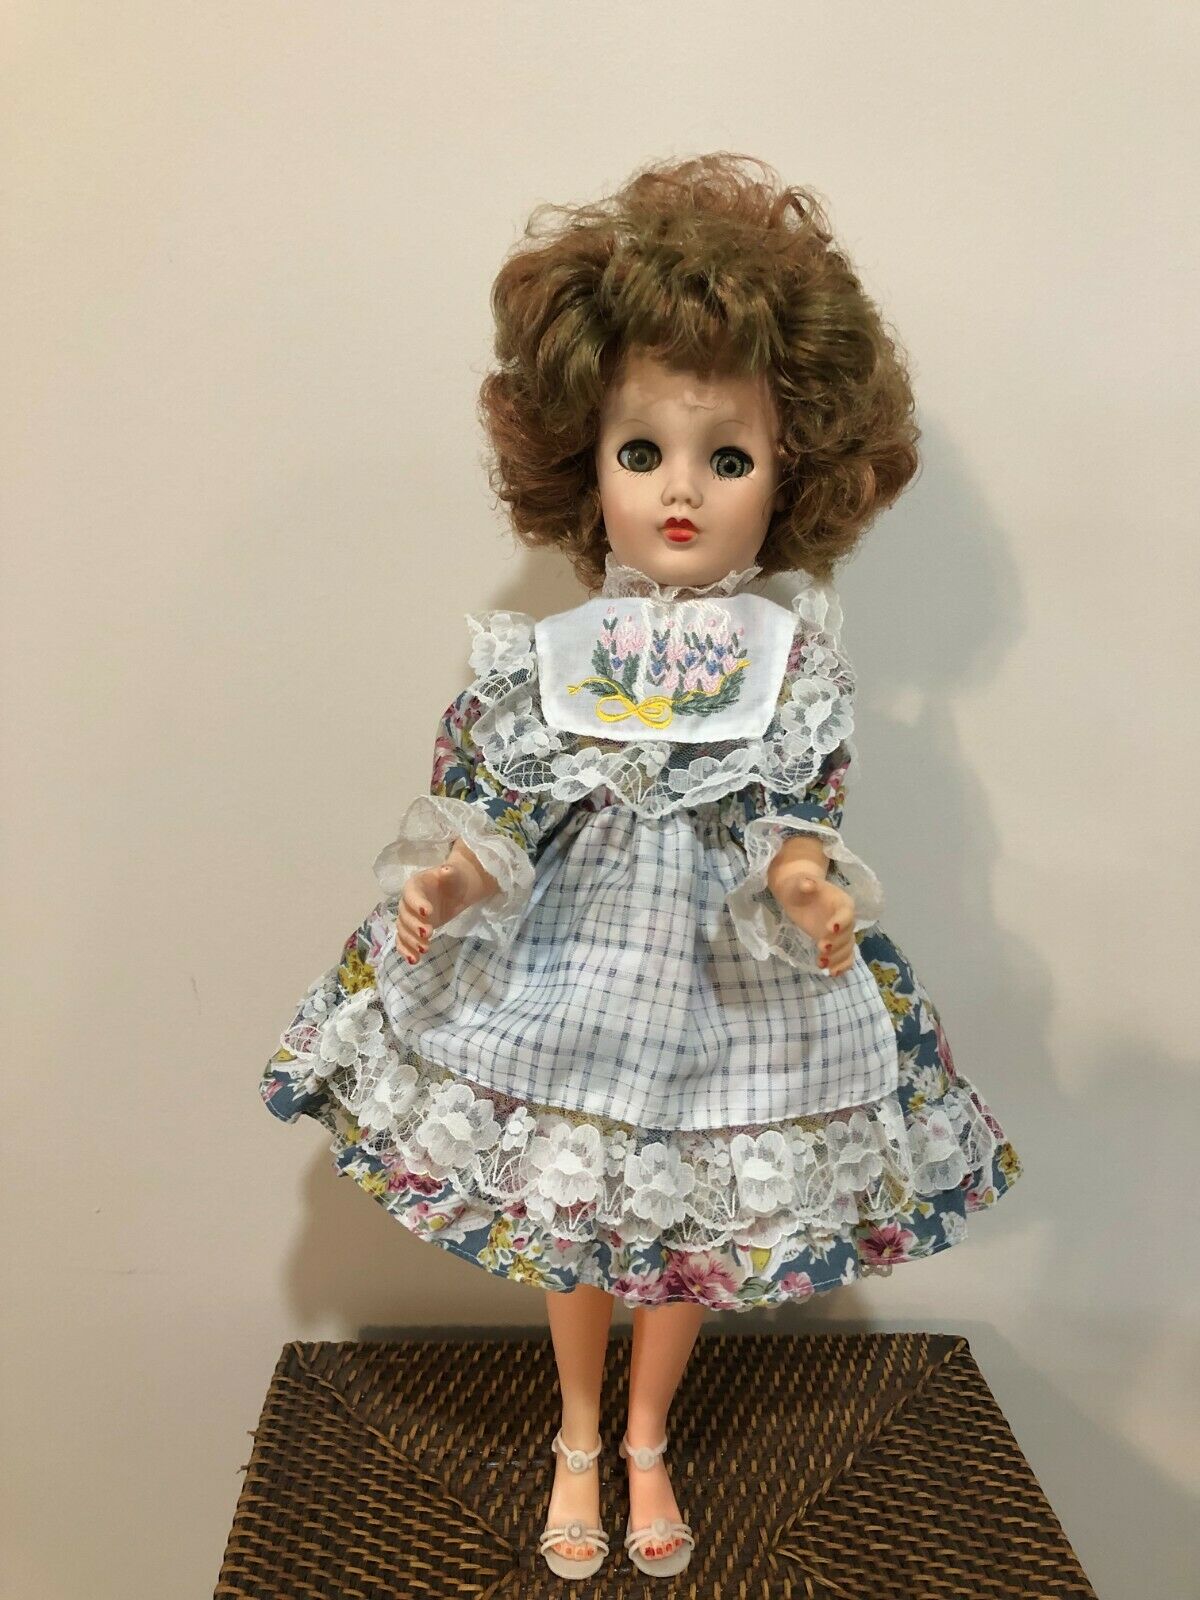 Vintage 1950’s 19” High Heel Fashion Doll